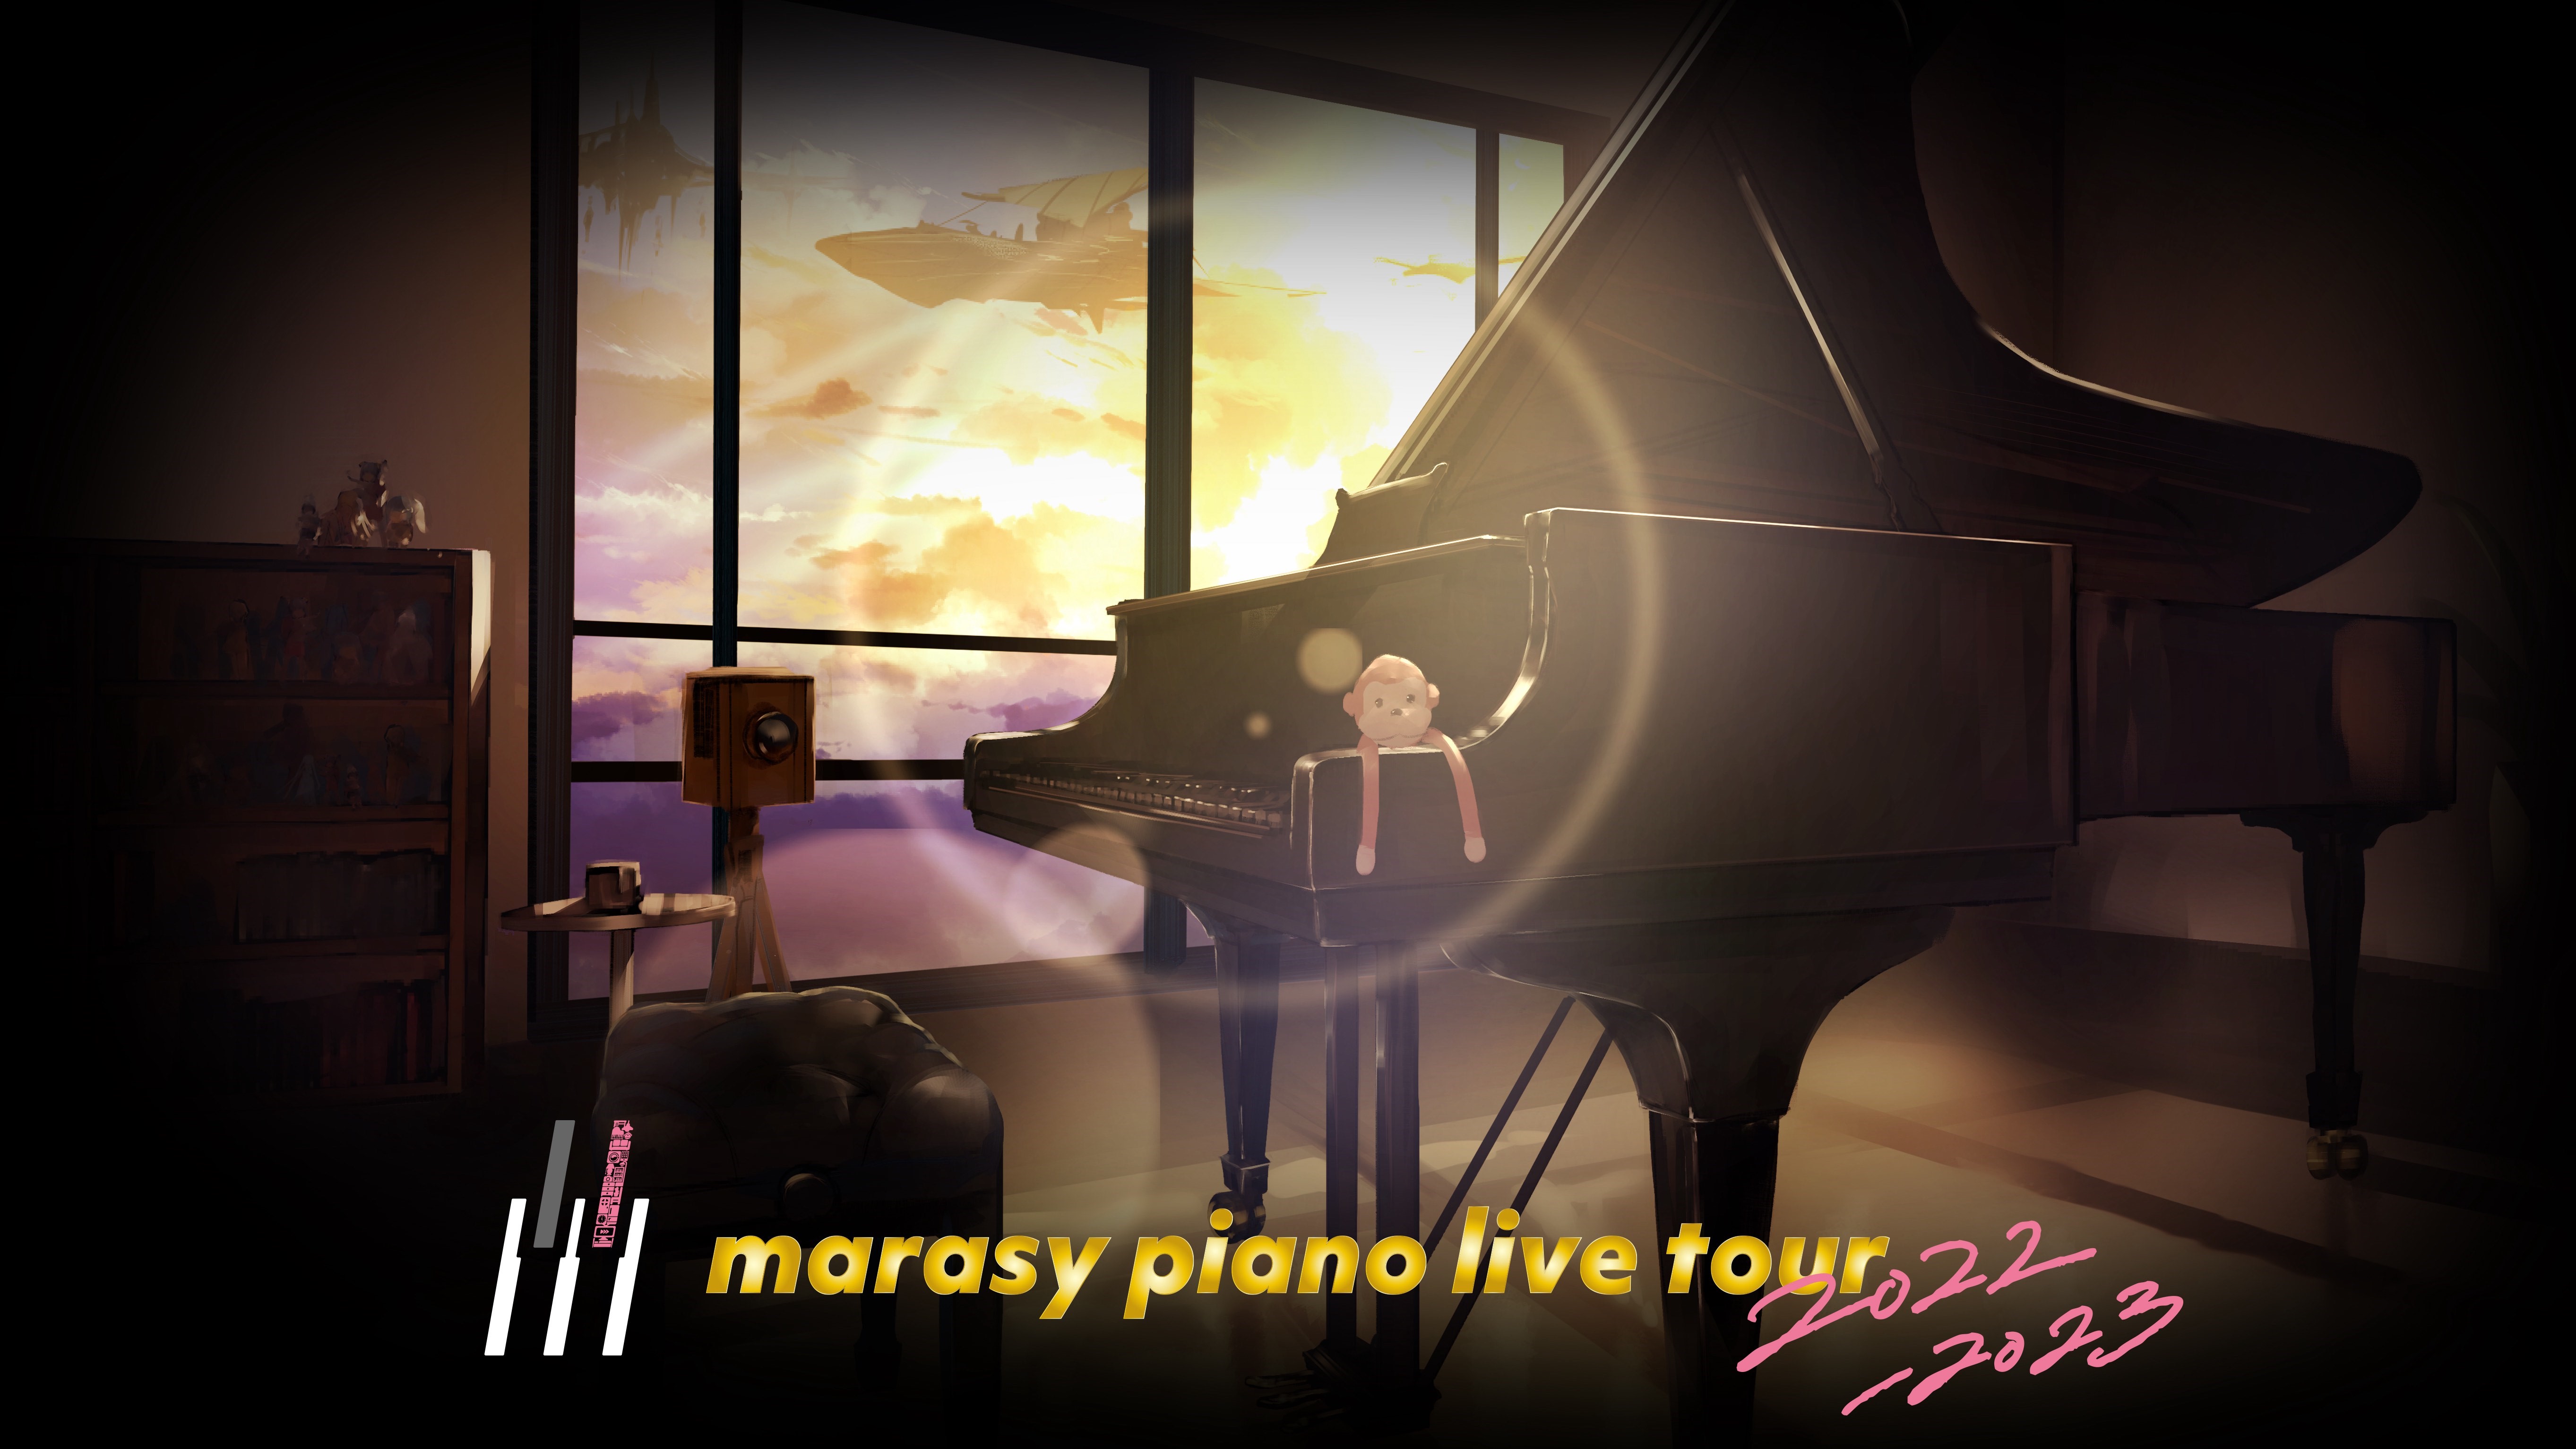 marasy piano live tour 2022-2023